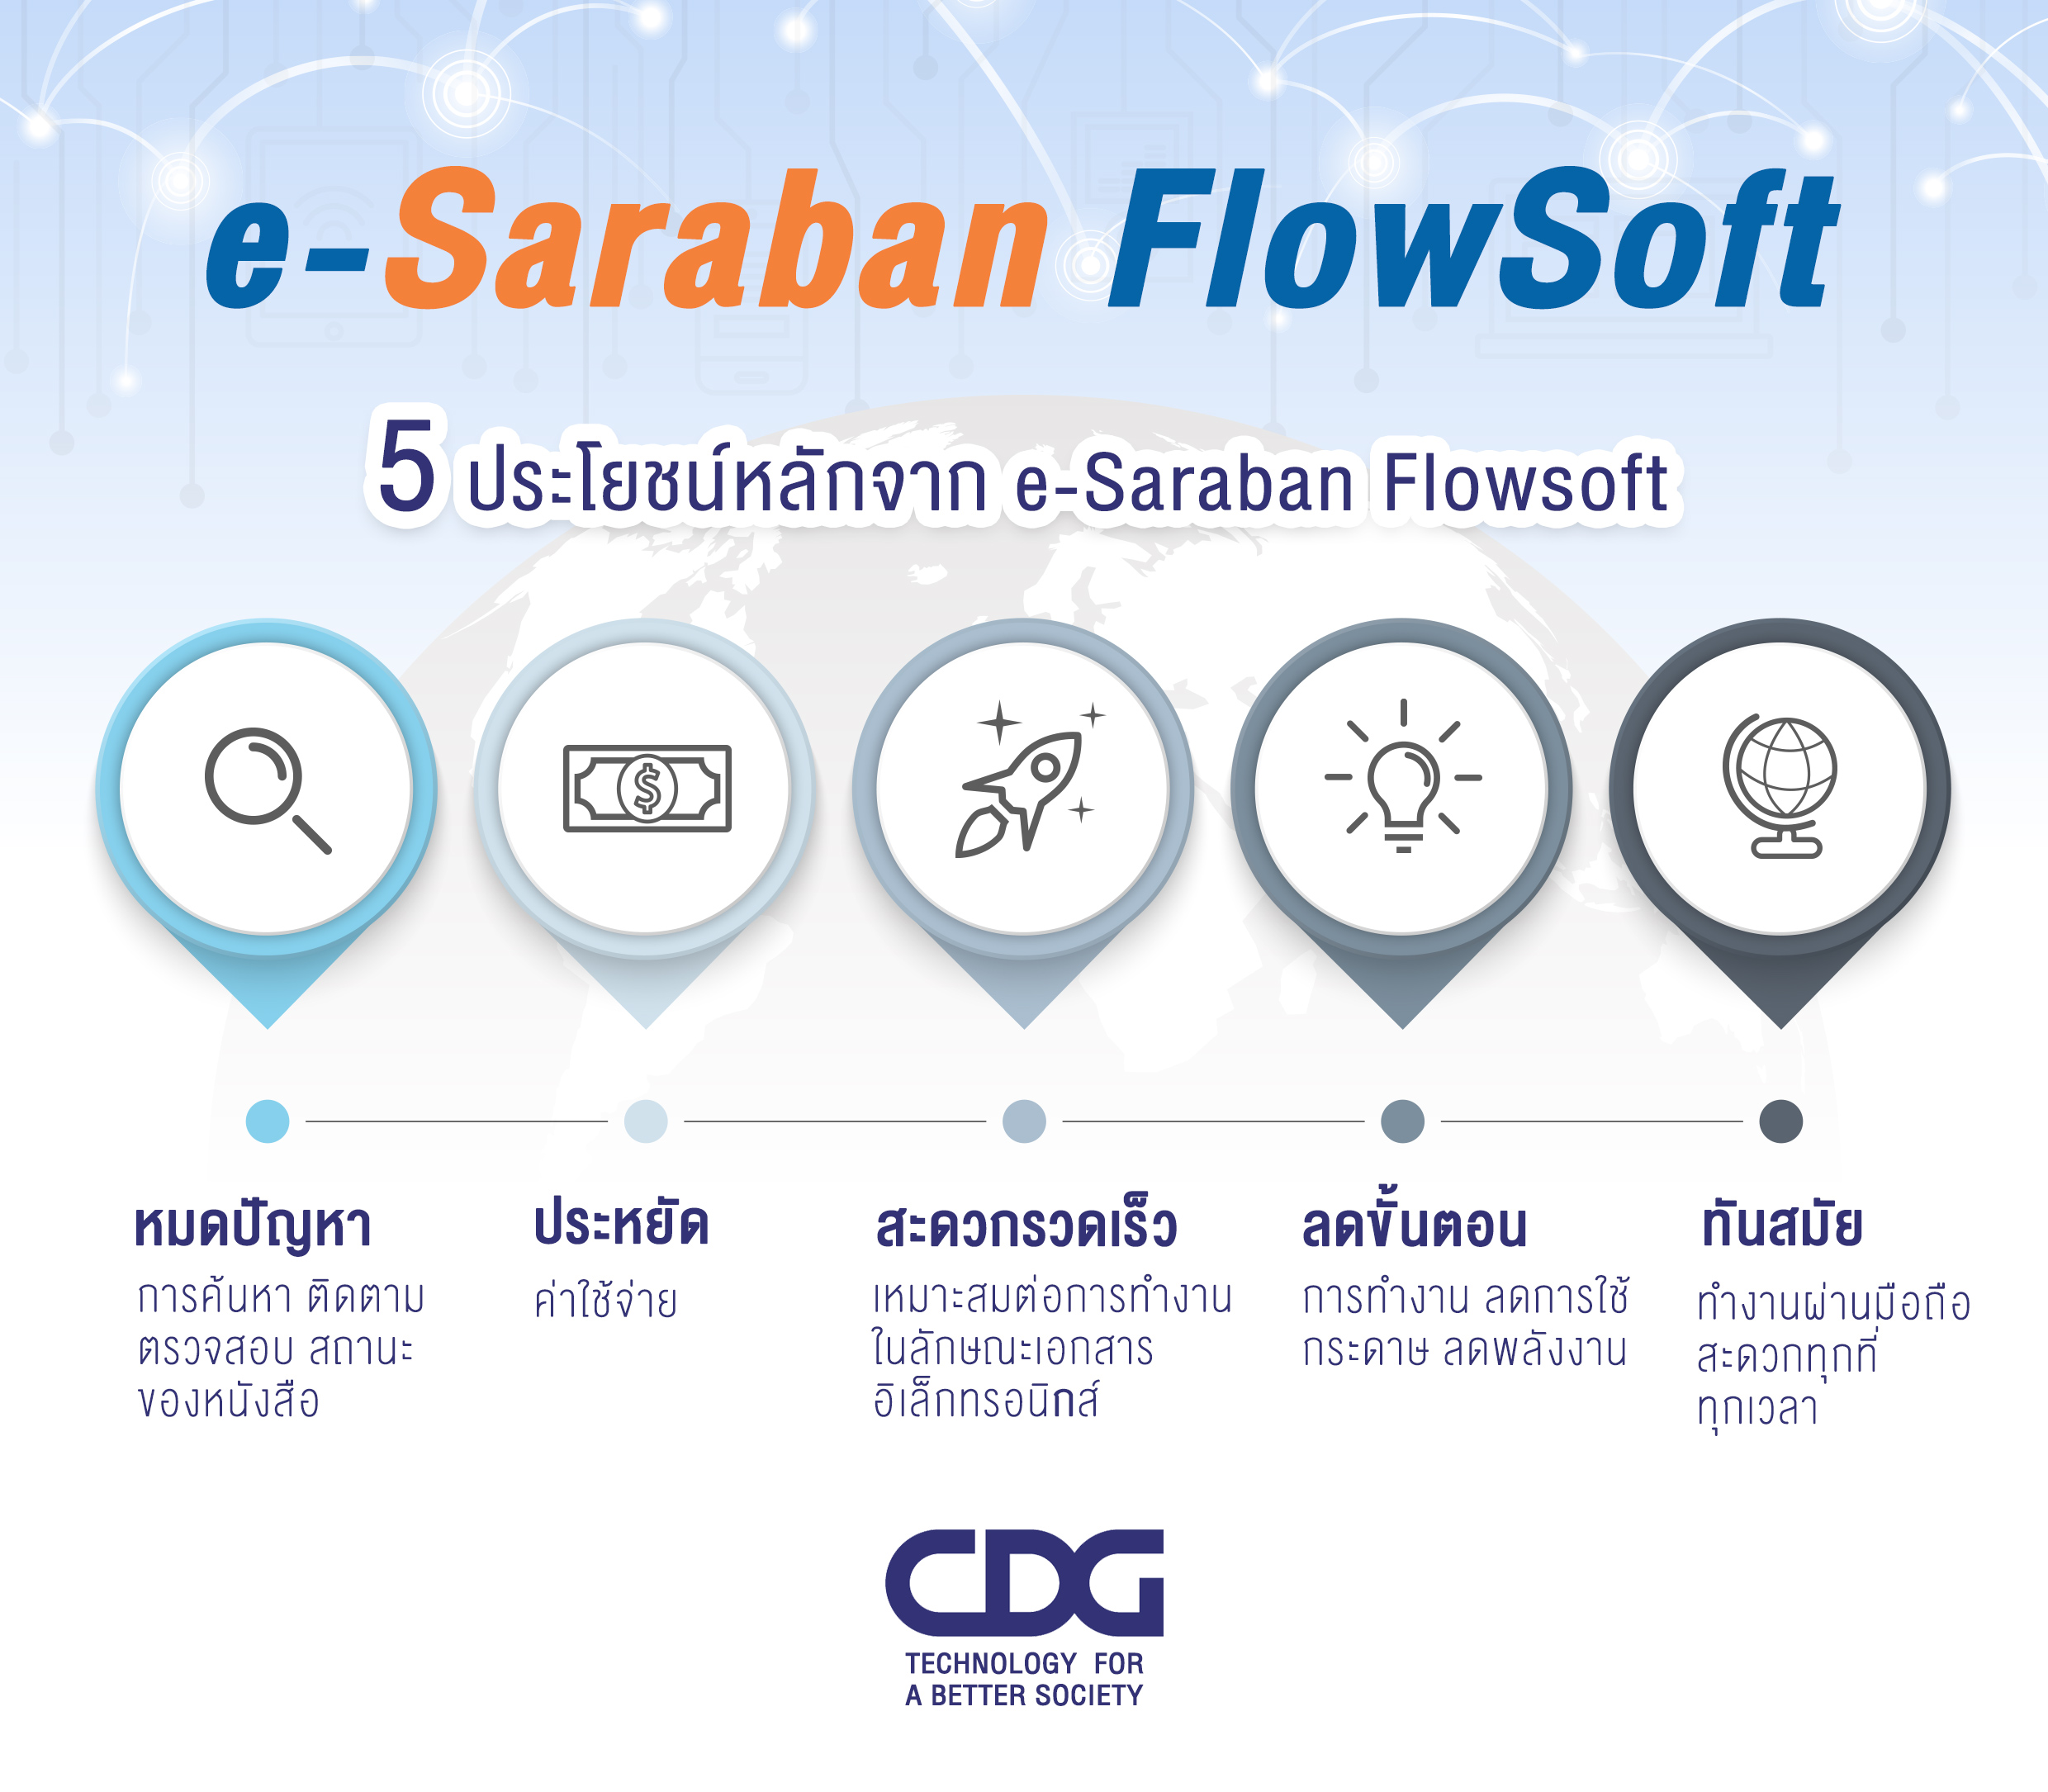 CDG ผู้นำด้านระบบเทคโนโลยีสารสนเทศ ผู้พัฒนาระบบ e-Saraban FlowSoft